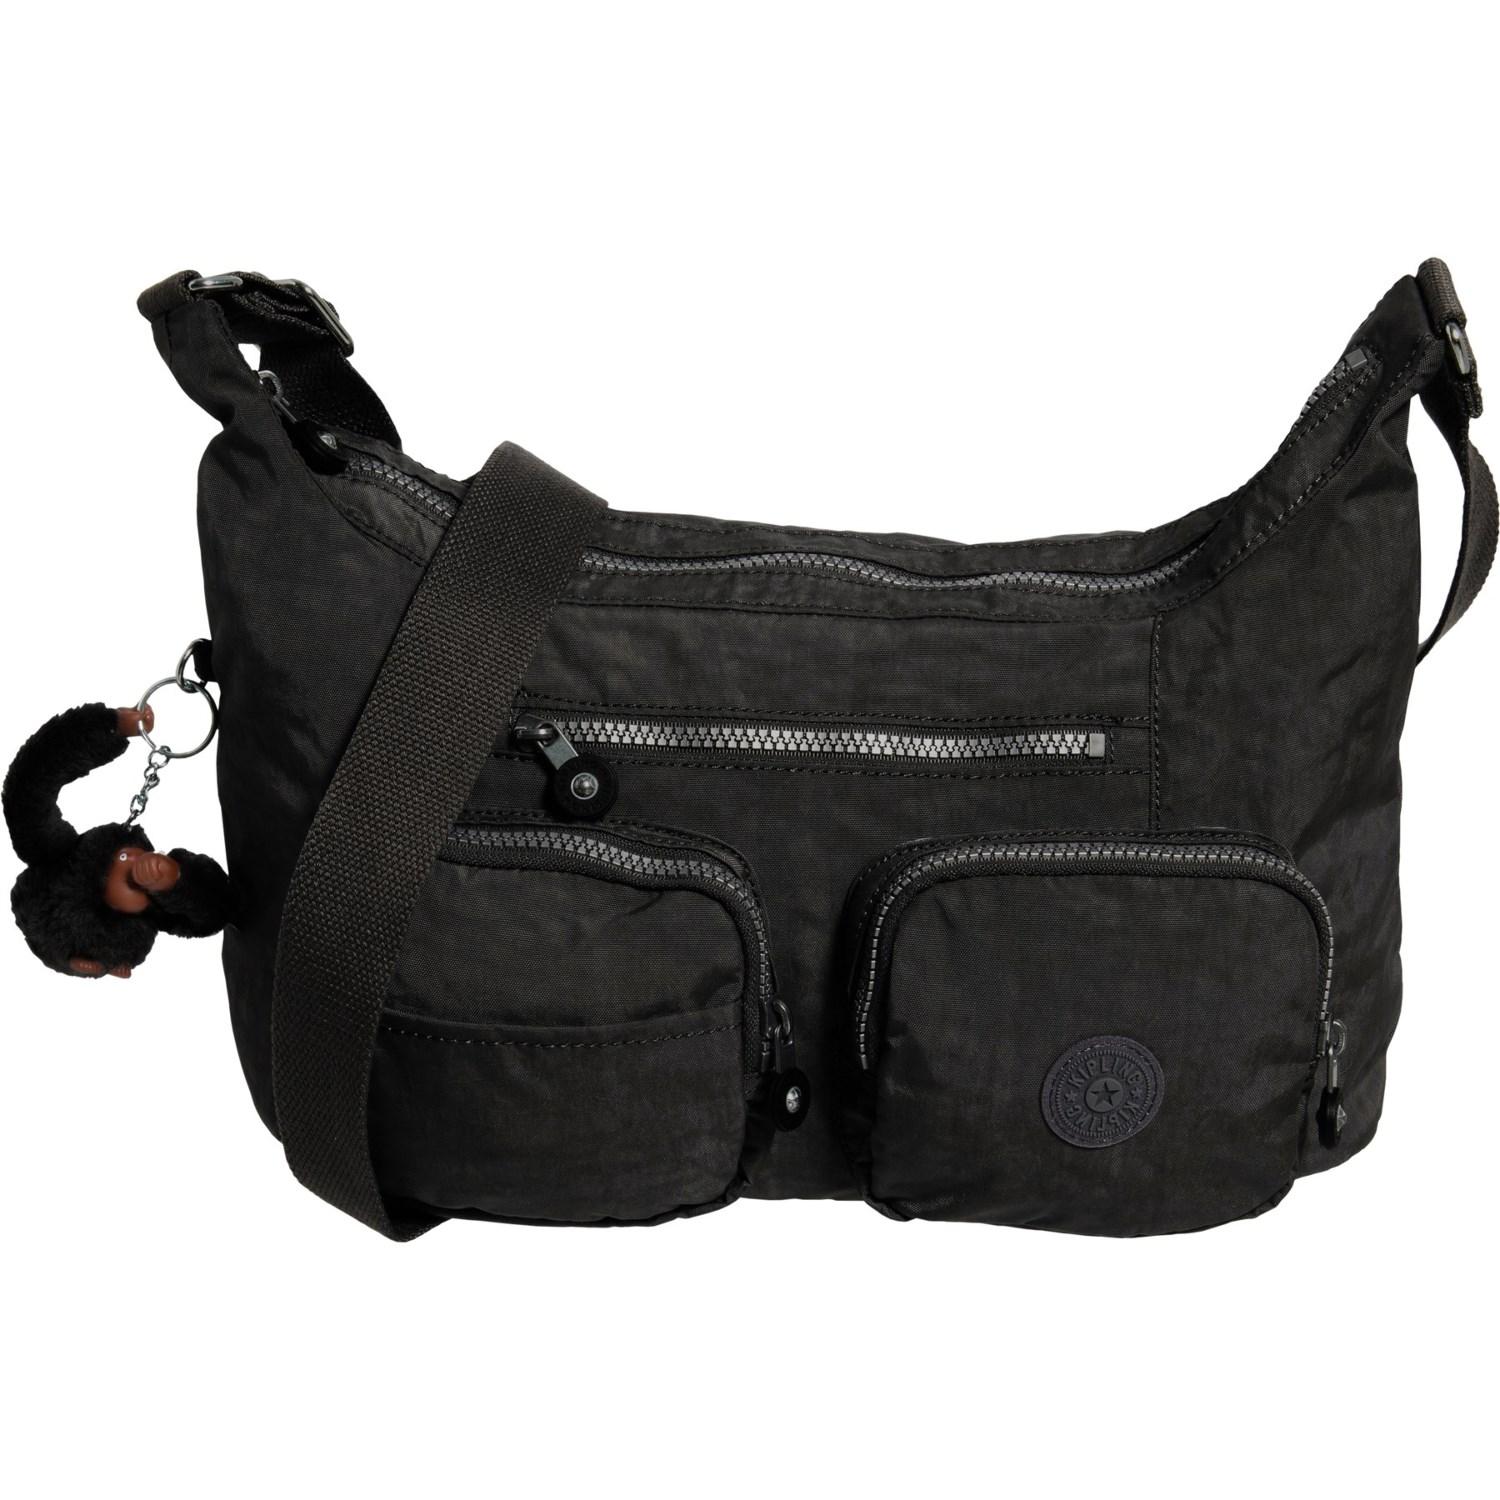 Kipling Jarita Shoulder Bag in Black - Lyst